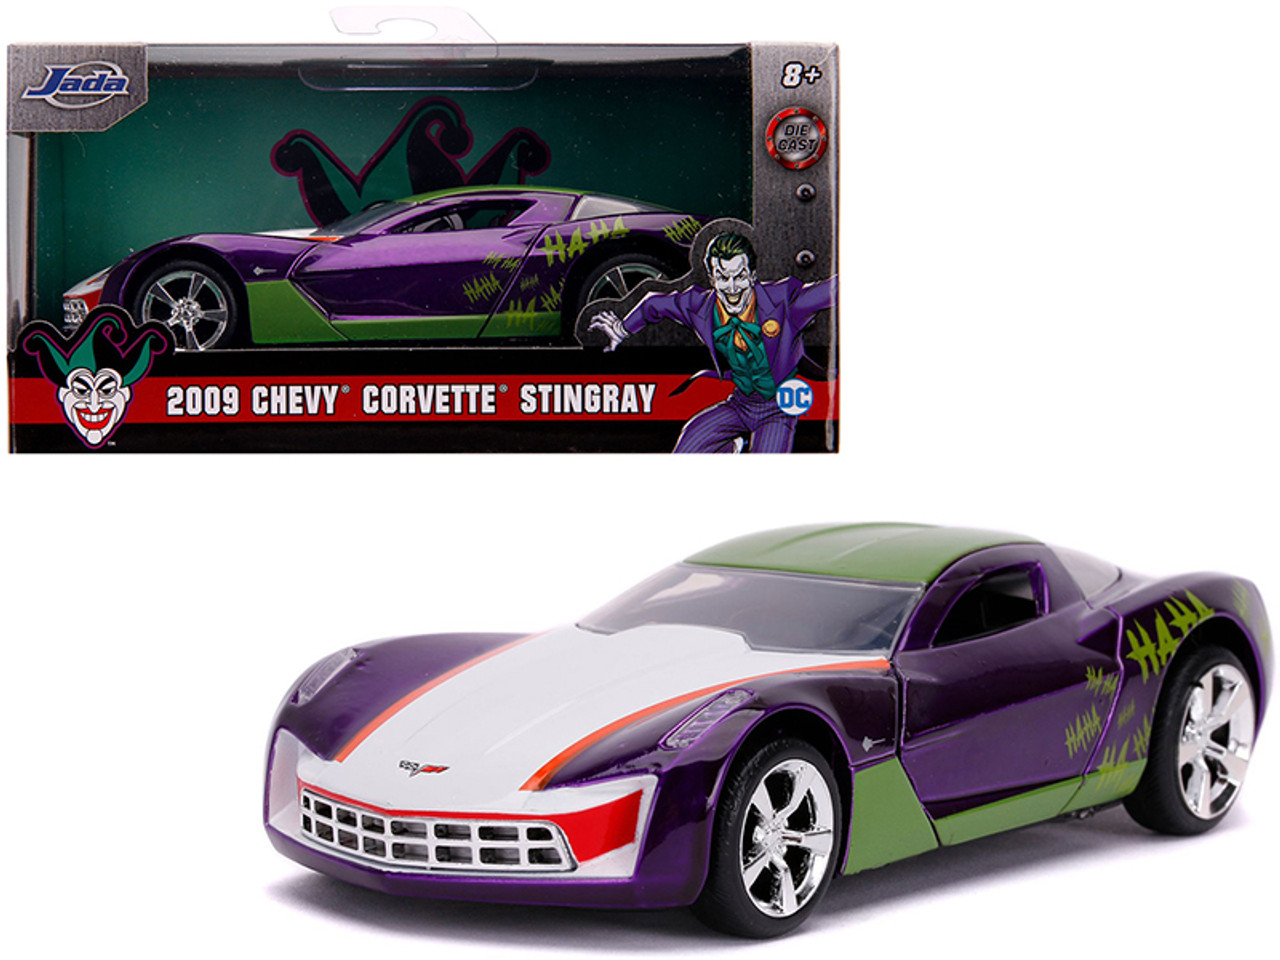 2009 Chevrolet Corvette Stingray "Joker" "DC Comics" "Hollywood Rides" Series 1/32 Diecast Model Car by Jada